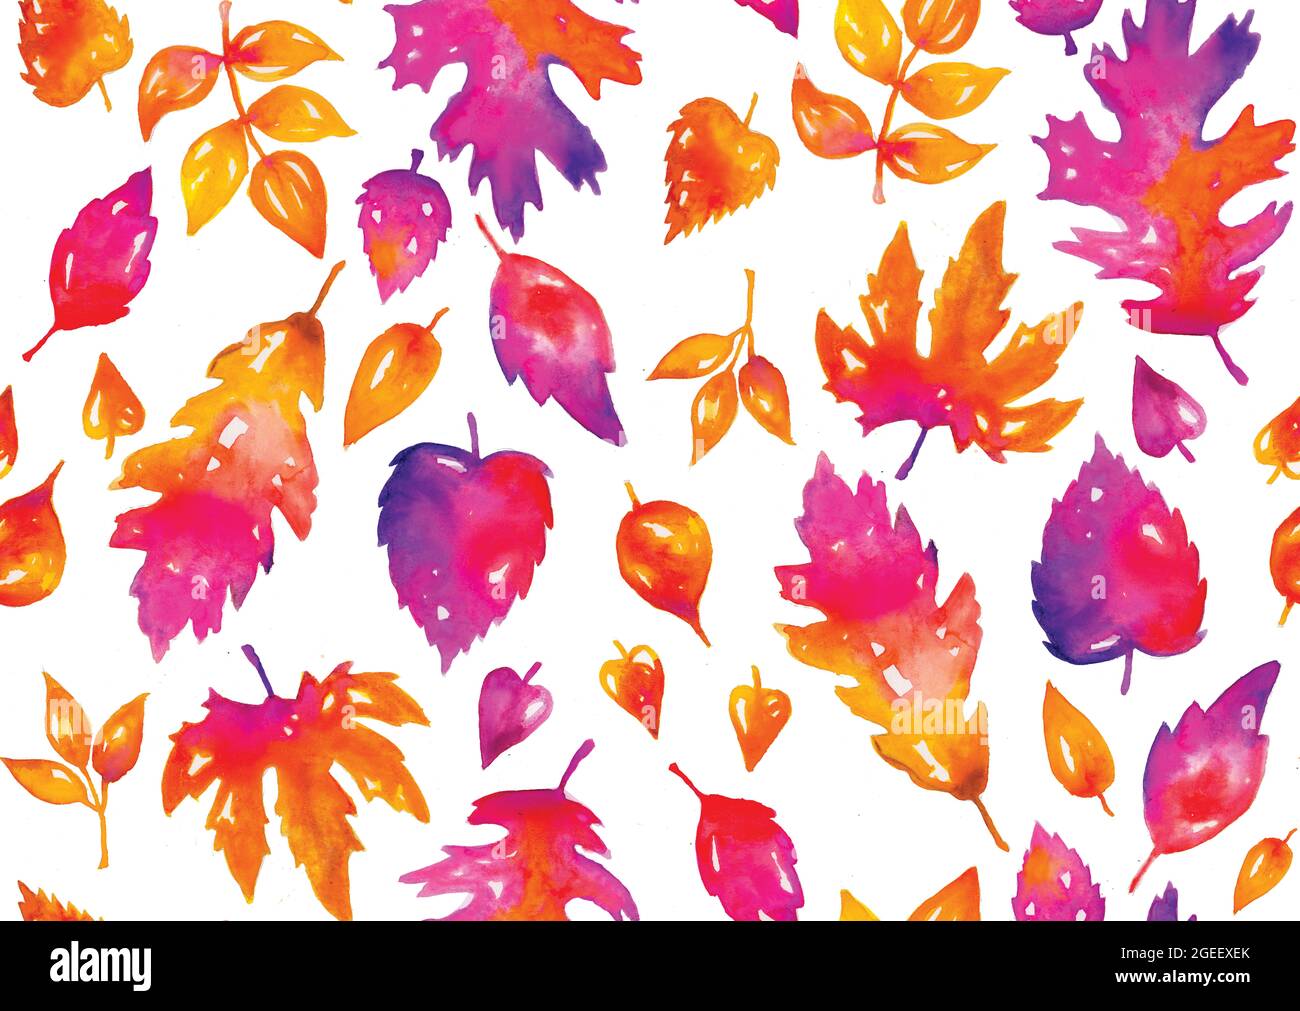 Handbemaltes, wasserfarbenes Herbstlaub-Muster Stockfoto